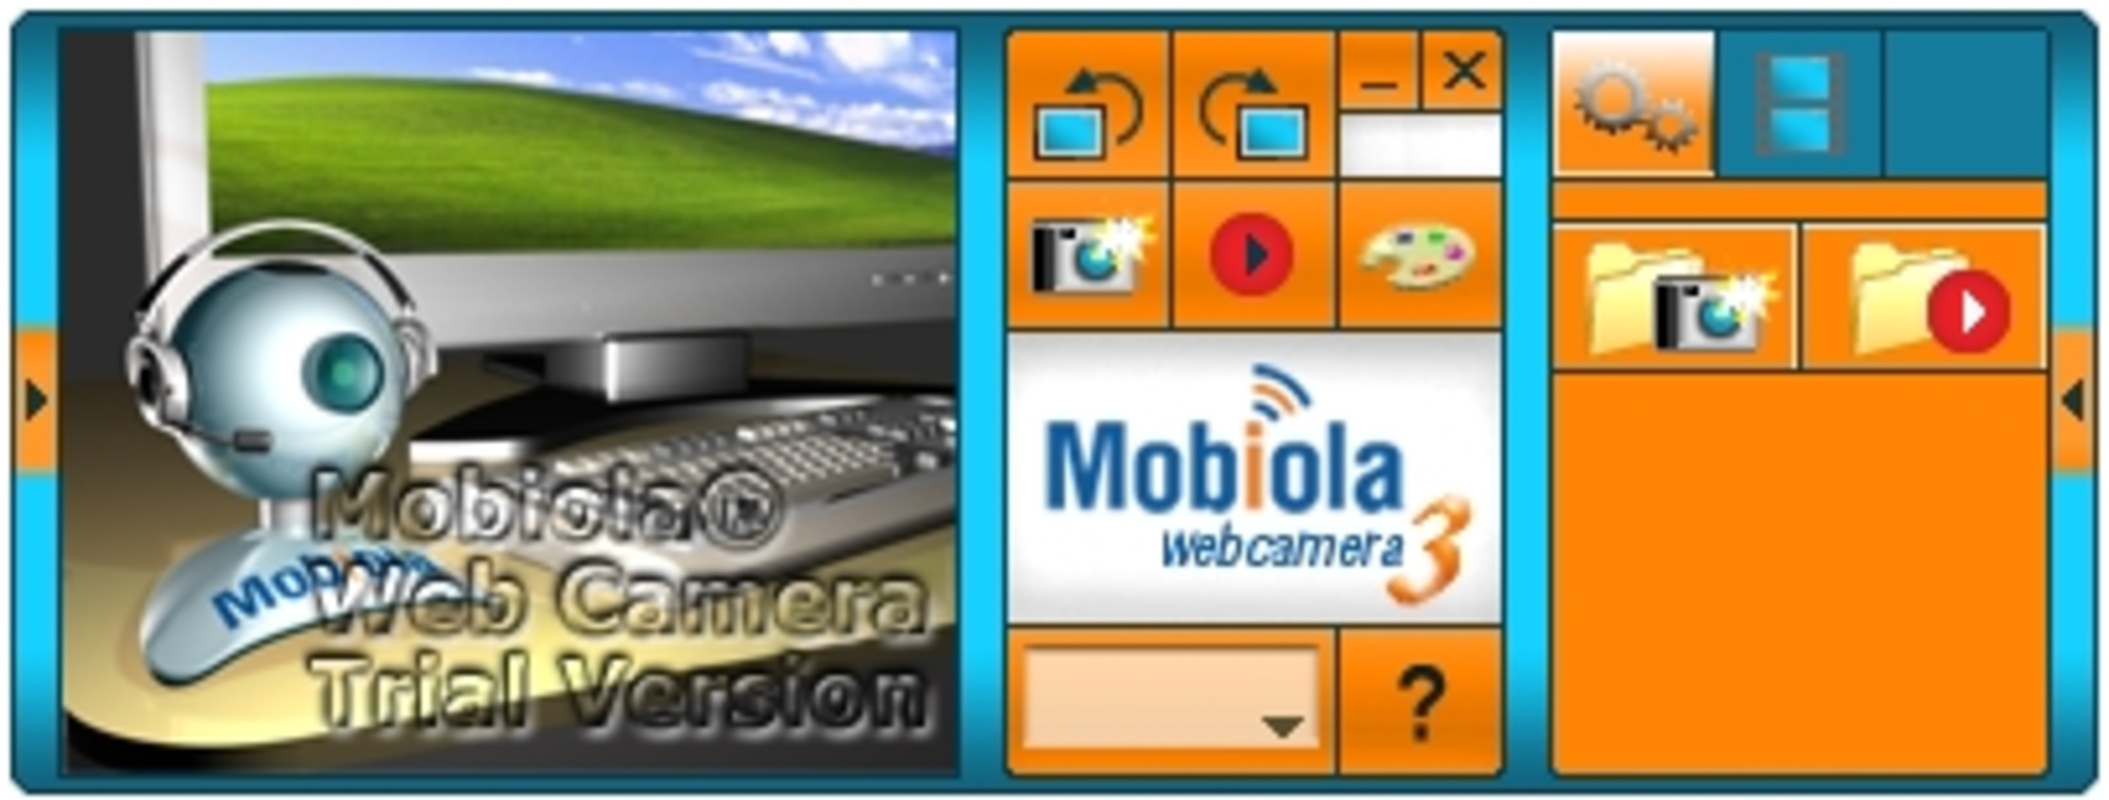 Mobiola Web Camera 3.1.8 feature